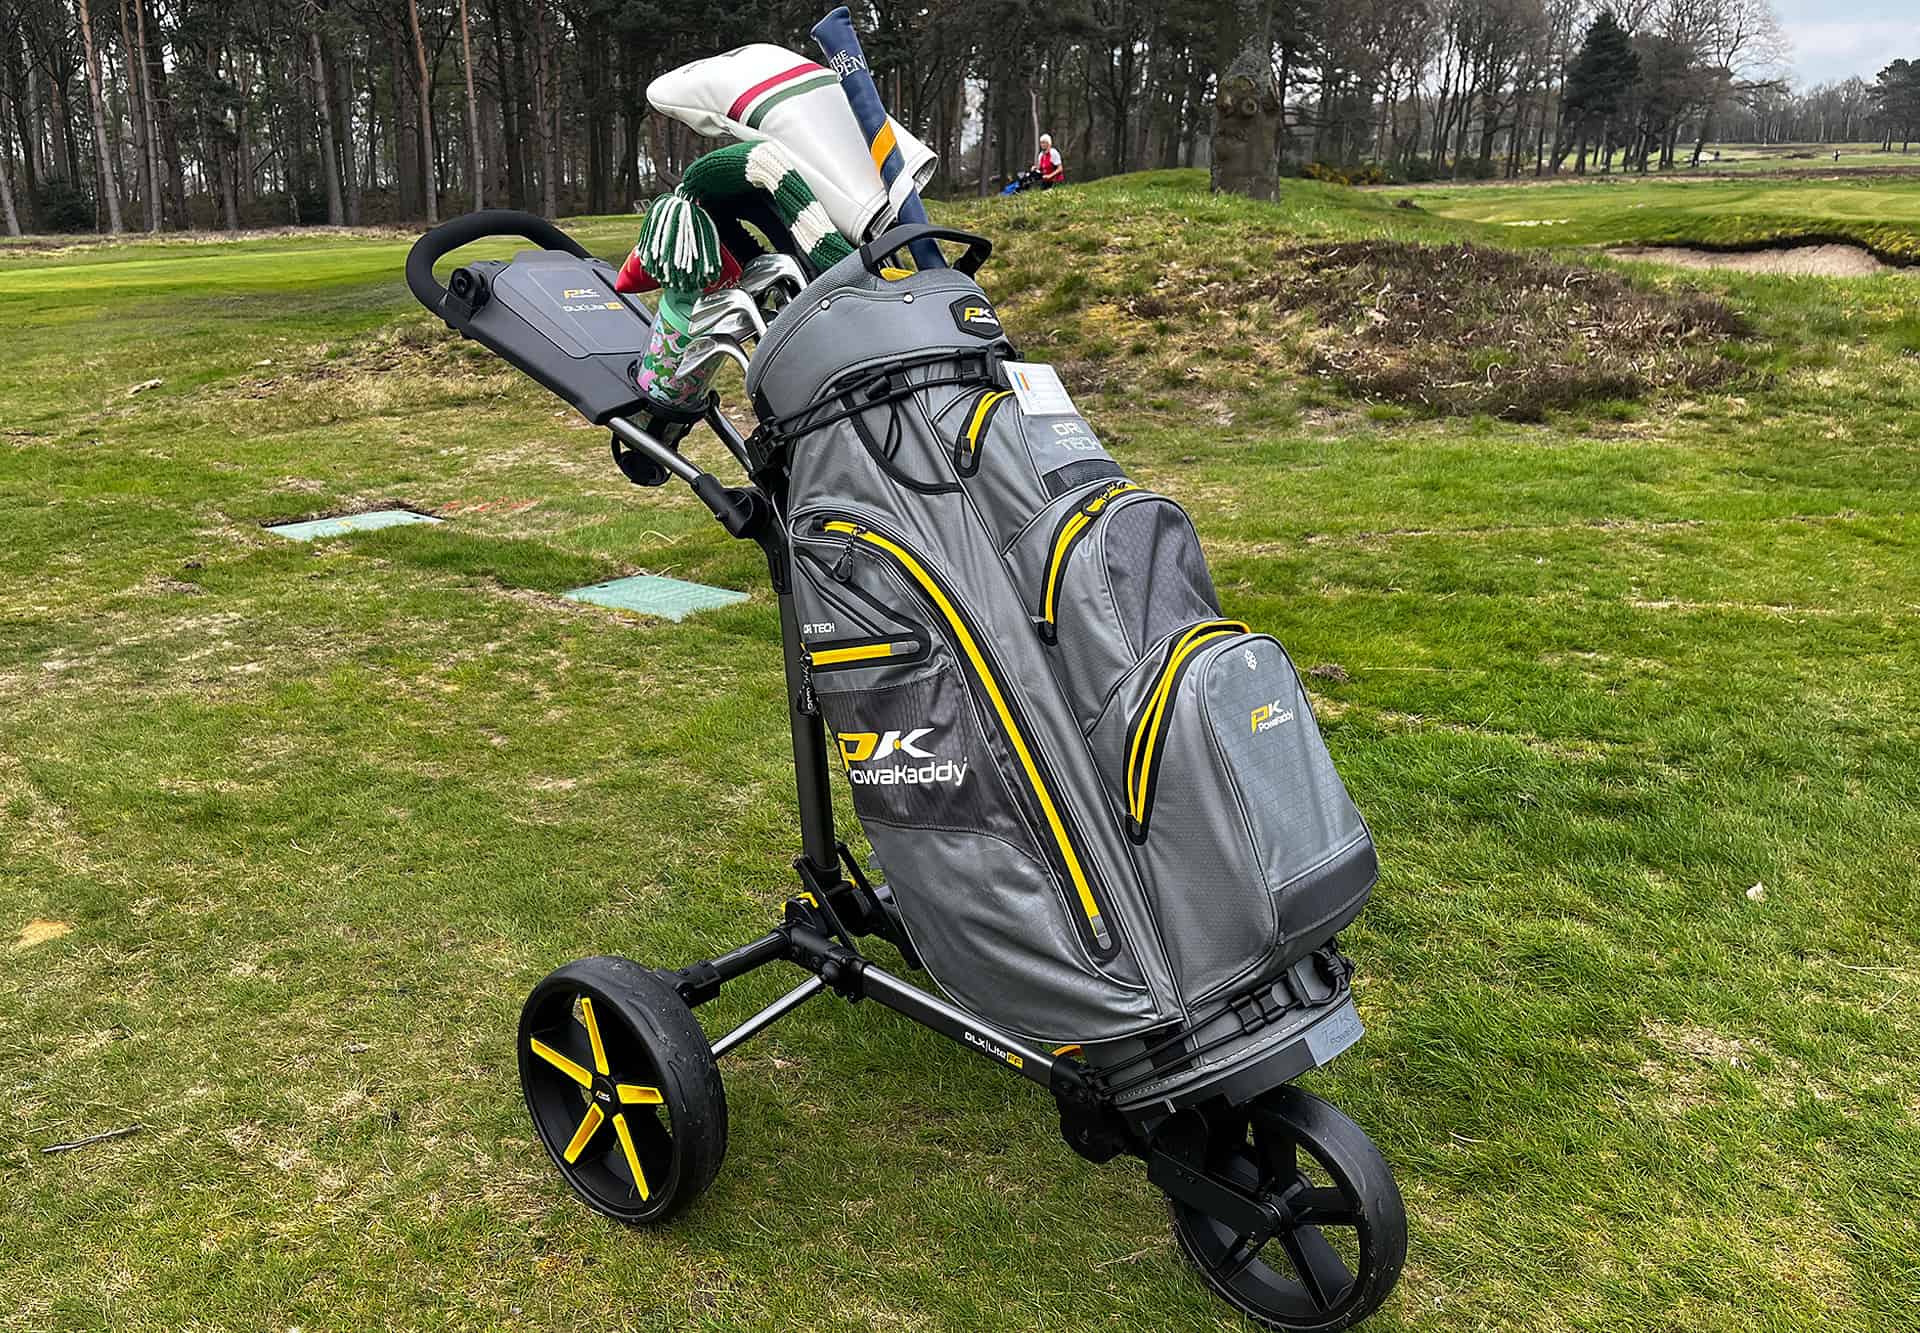 Powakaddy Dri-Tech Golf Bag Review